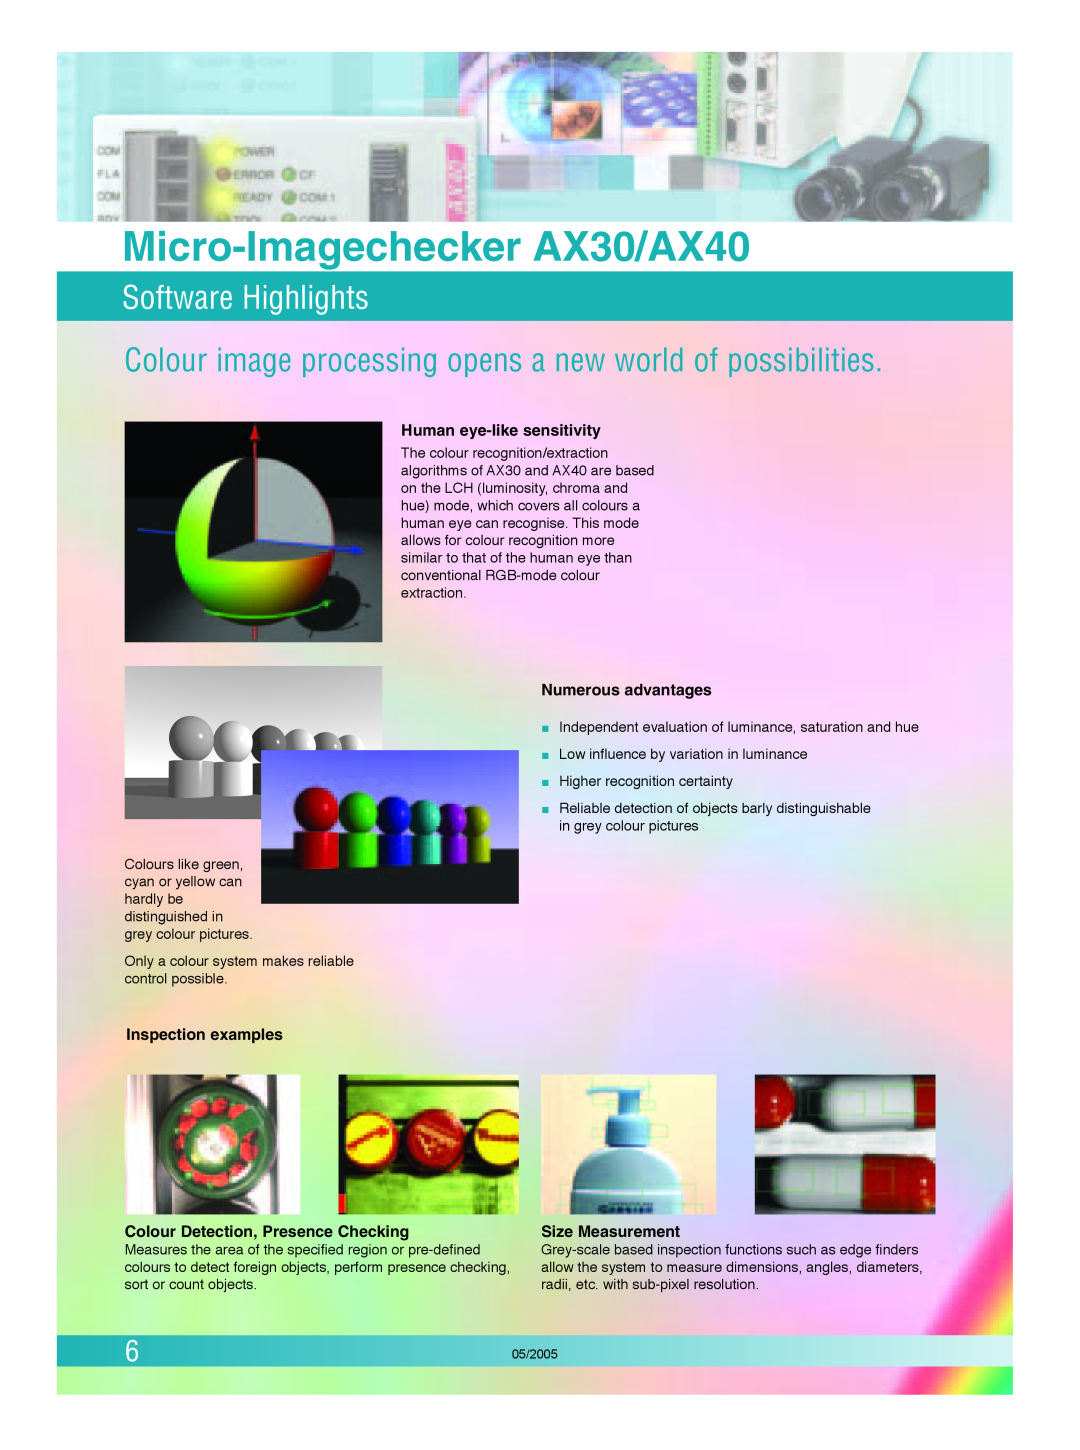 Panasonic AX30 Software Highlights, Colour image processing opens a new world of possibilities, Human eye-like sensitivity 